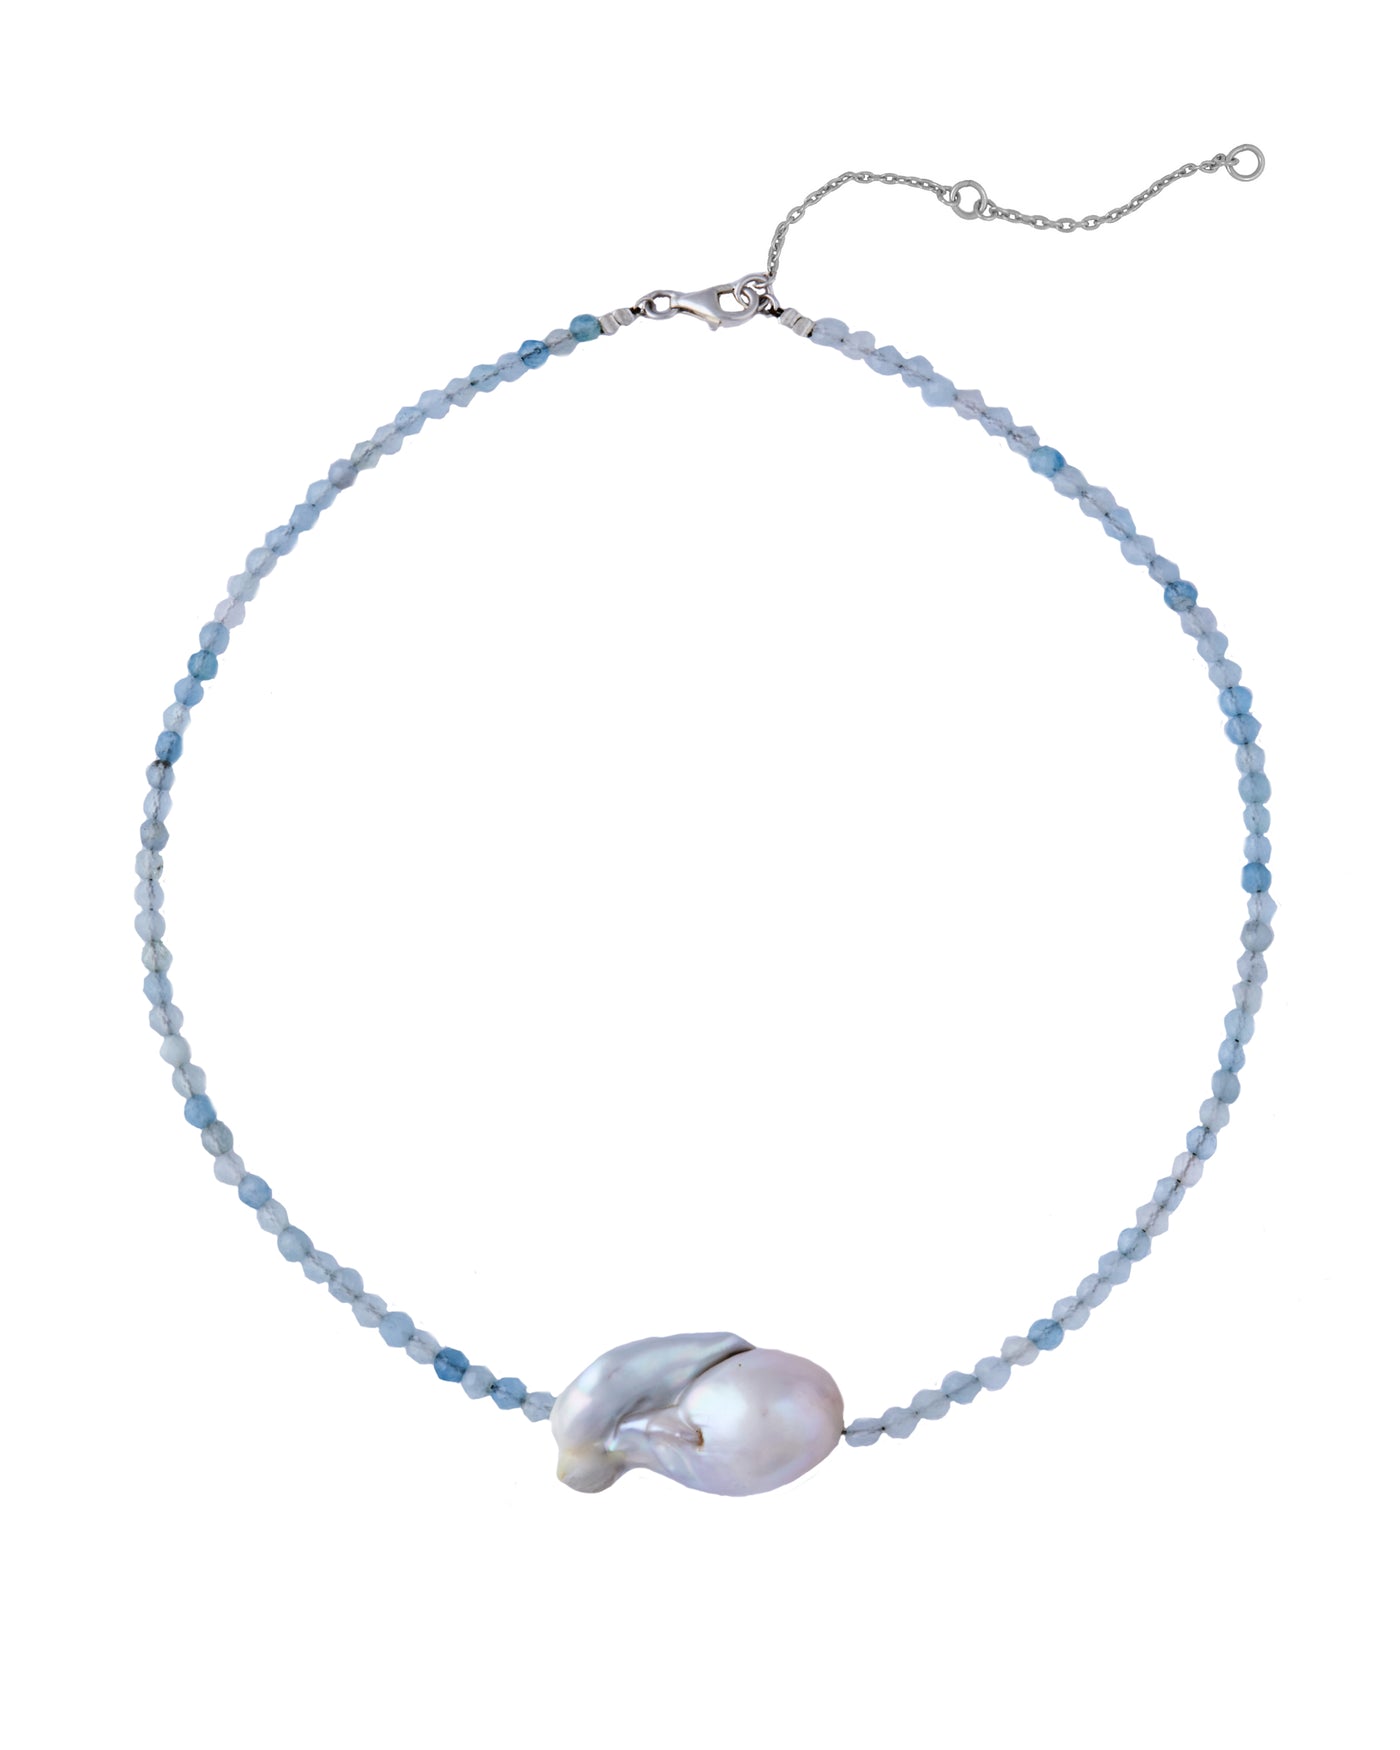 Big baroque pearl on aquamarine beads choker. Silver